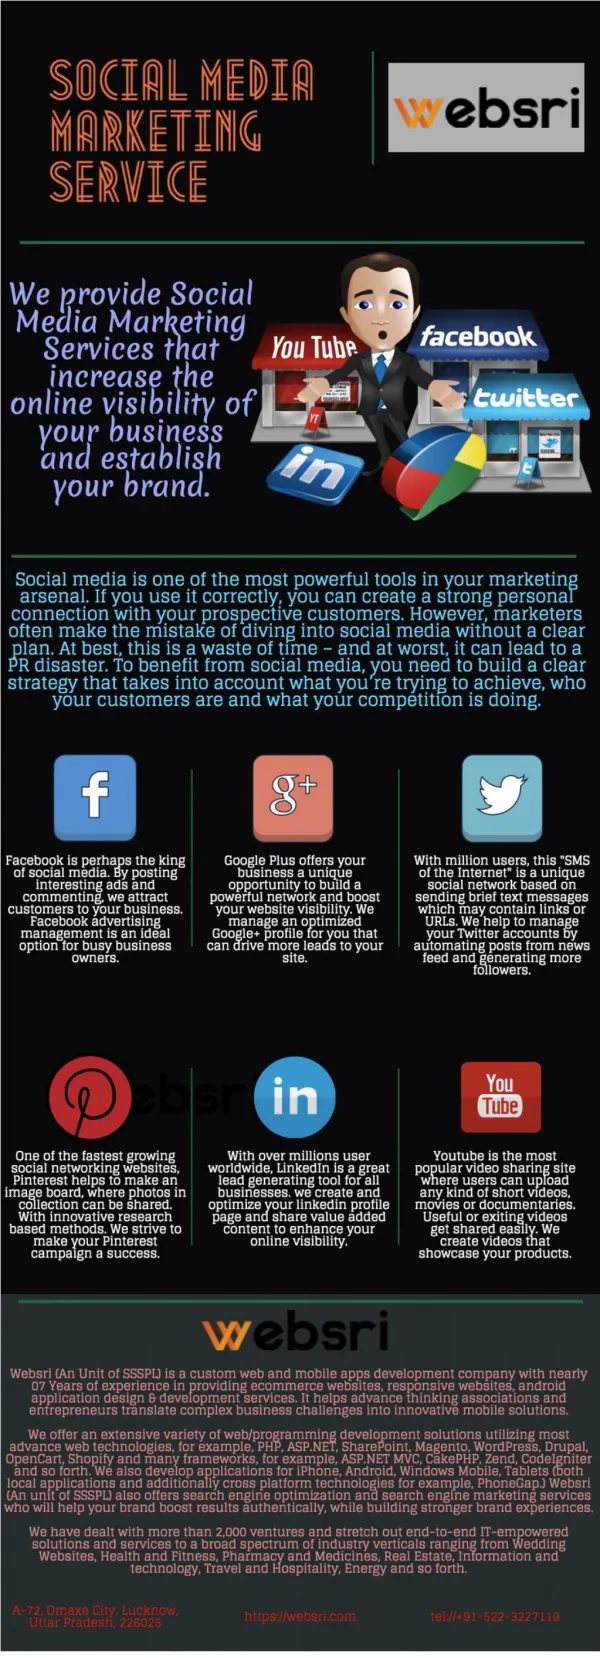 SOCIAL MEDIA SERVICE | WEBSRI - Web design company